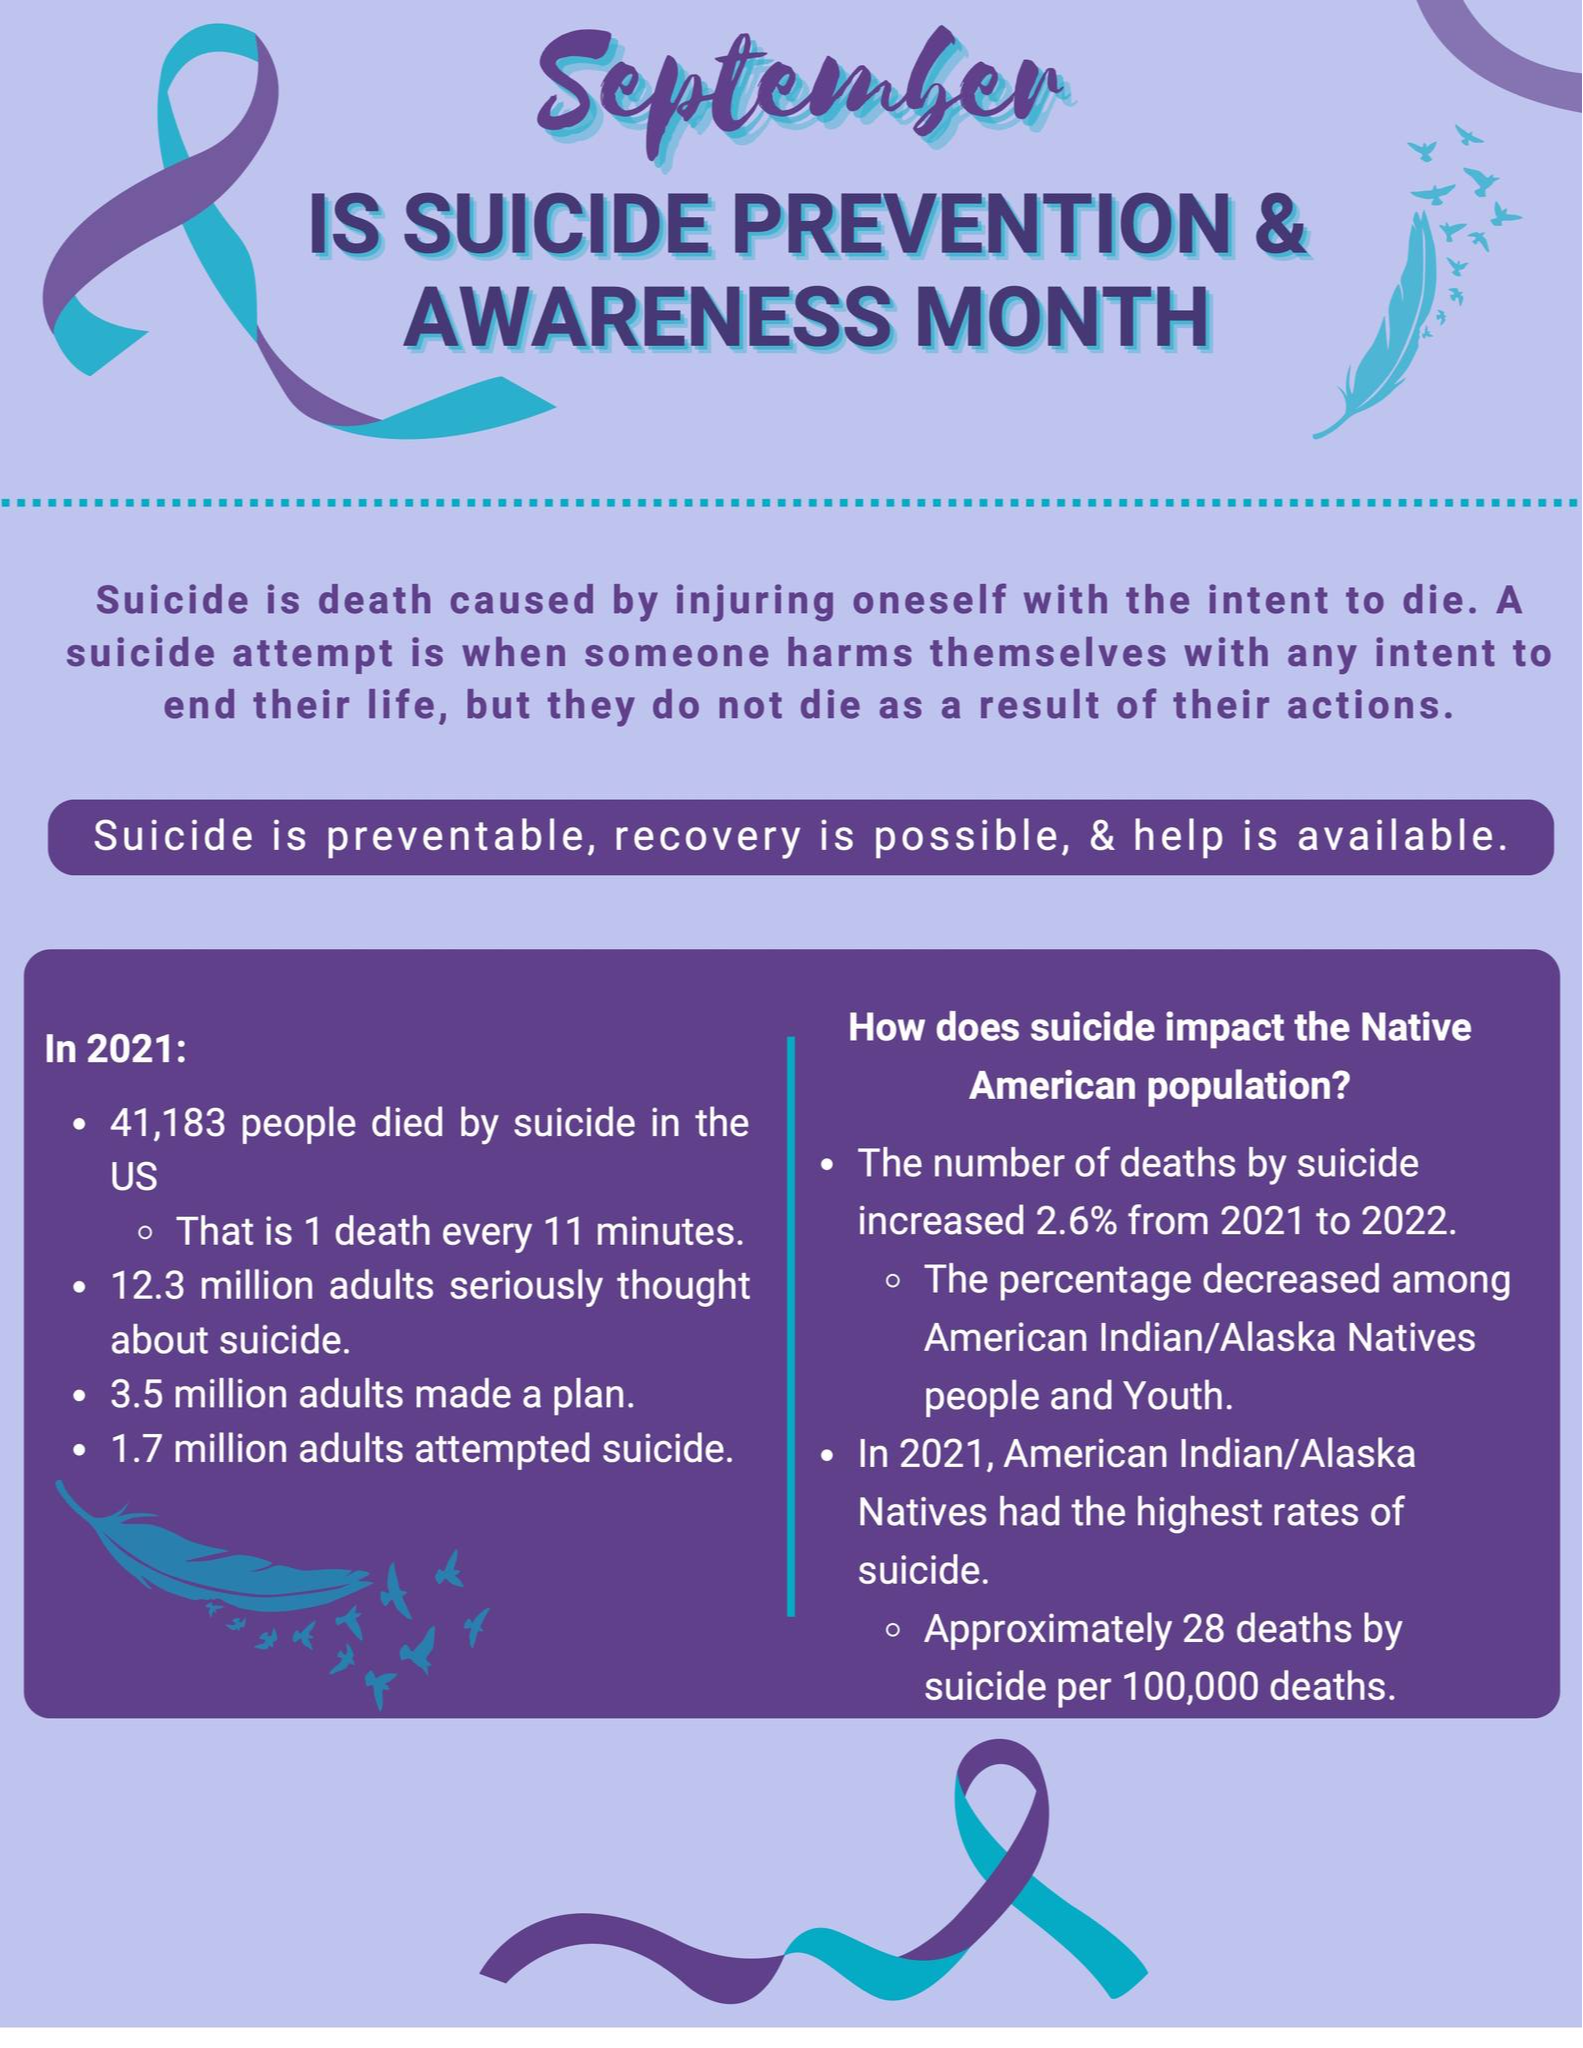 Suicide prevention month